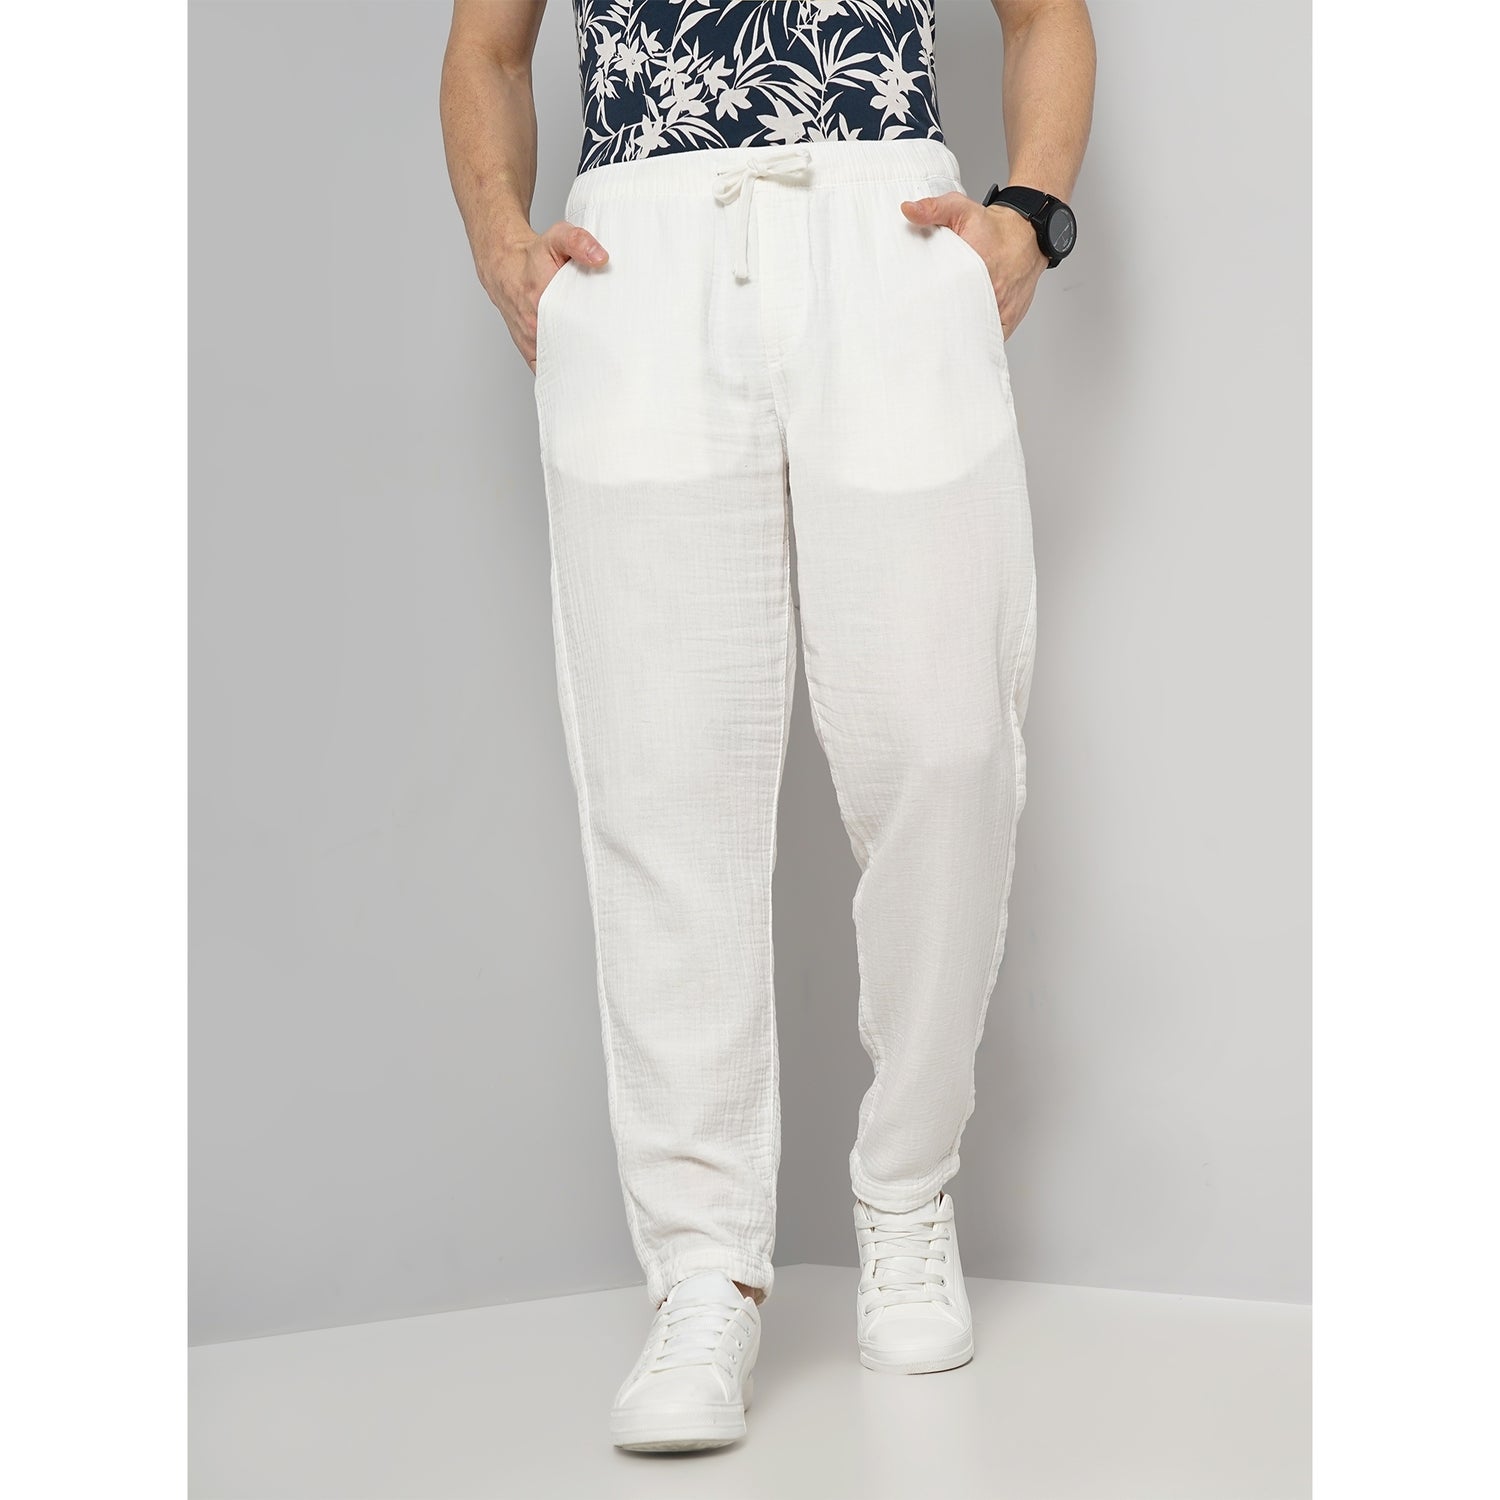 Men White Solid Slim Fit Double Cotton Cloth Fashion Pants Casual Trousers (GOBOGAZE)